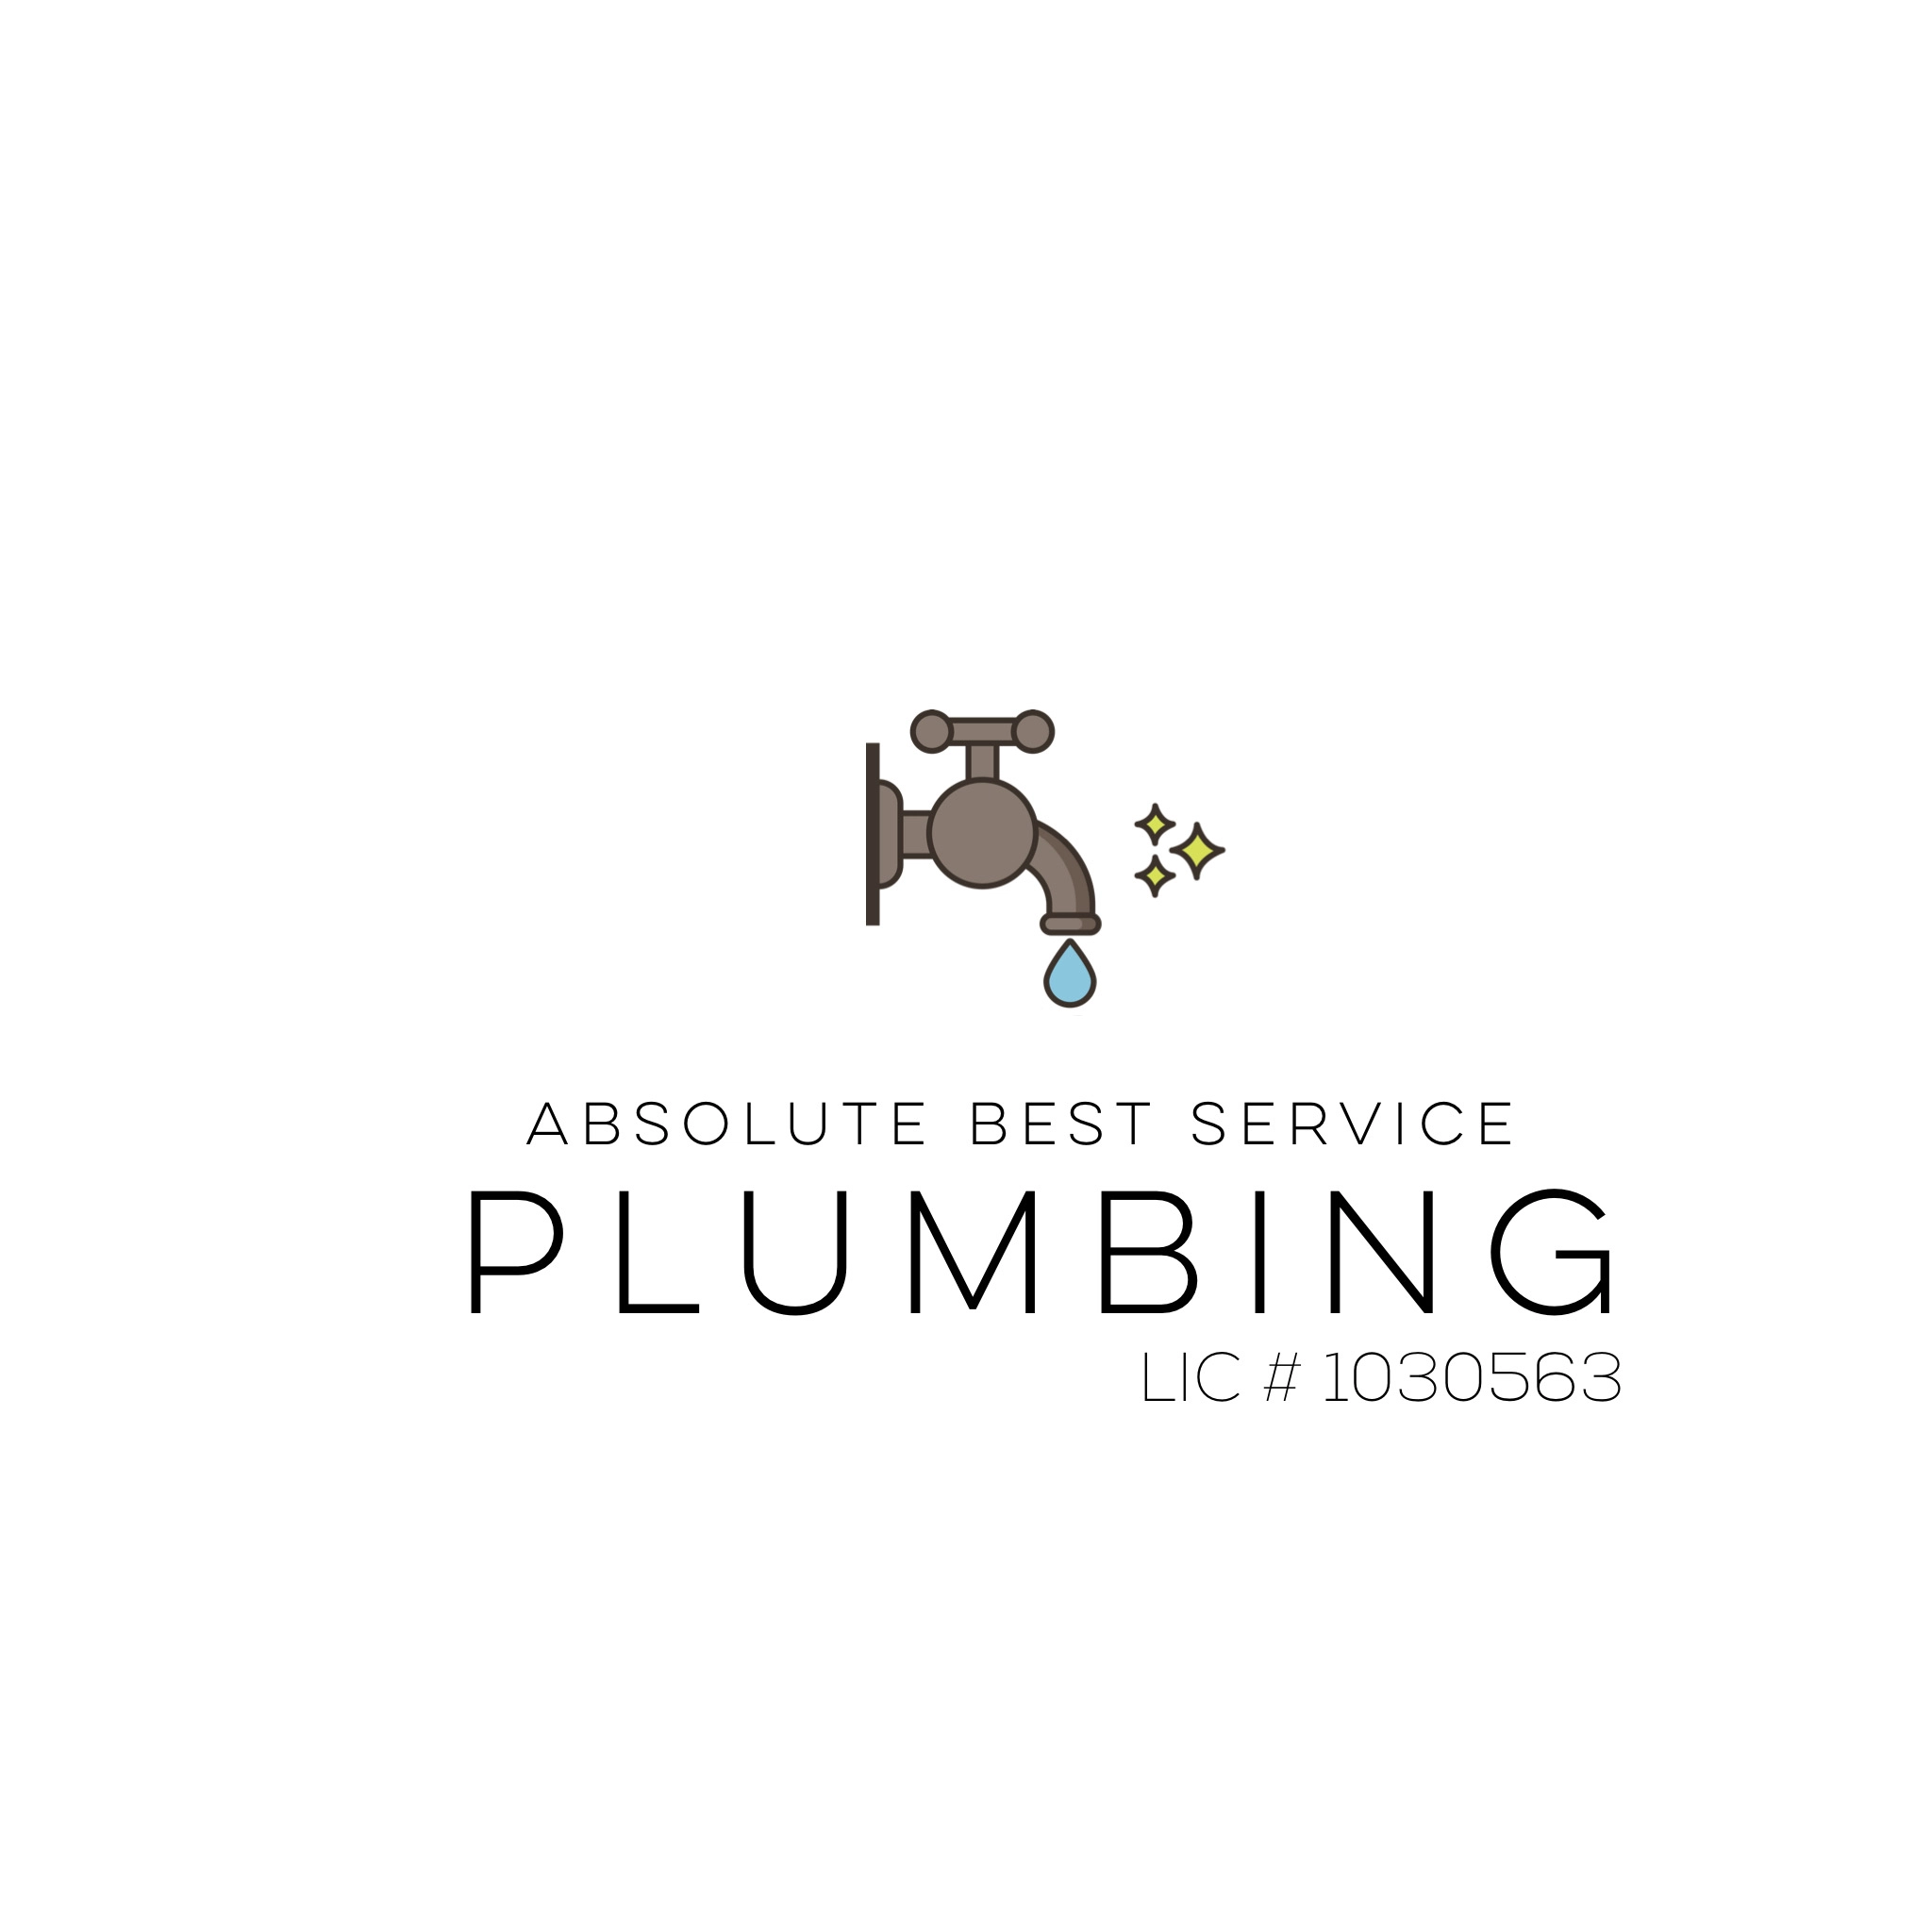 Absolute Best Service Plumbing Logo